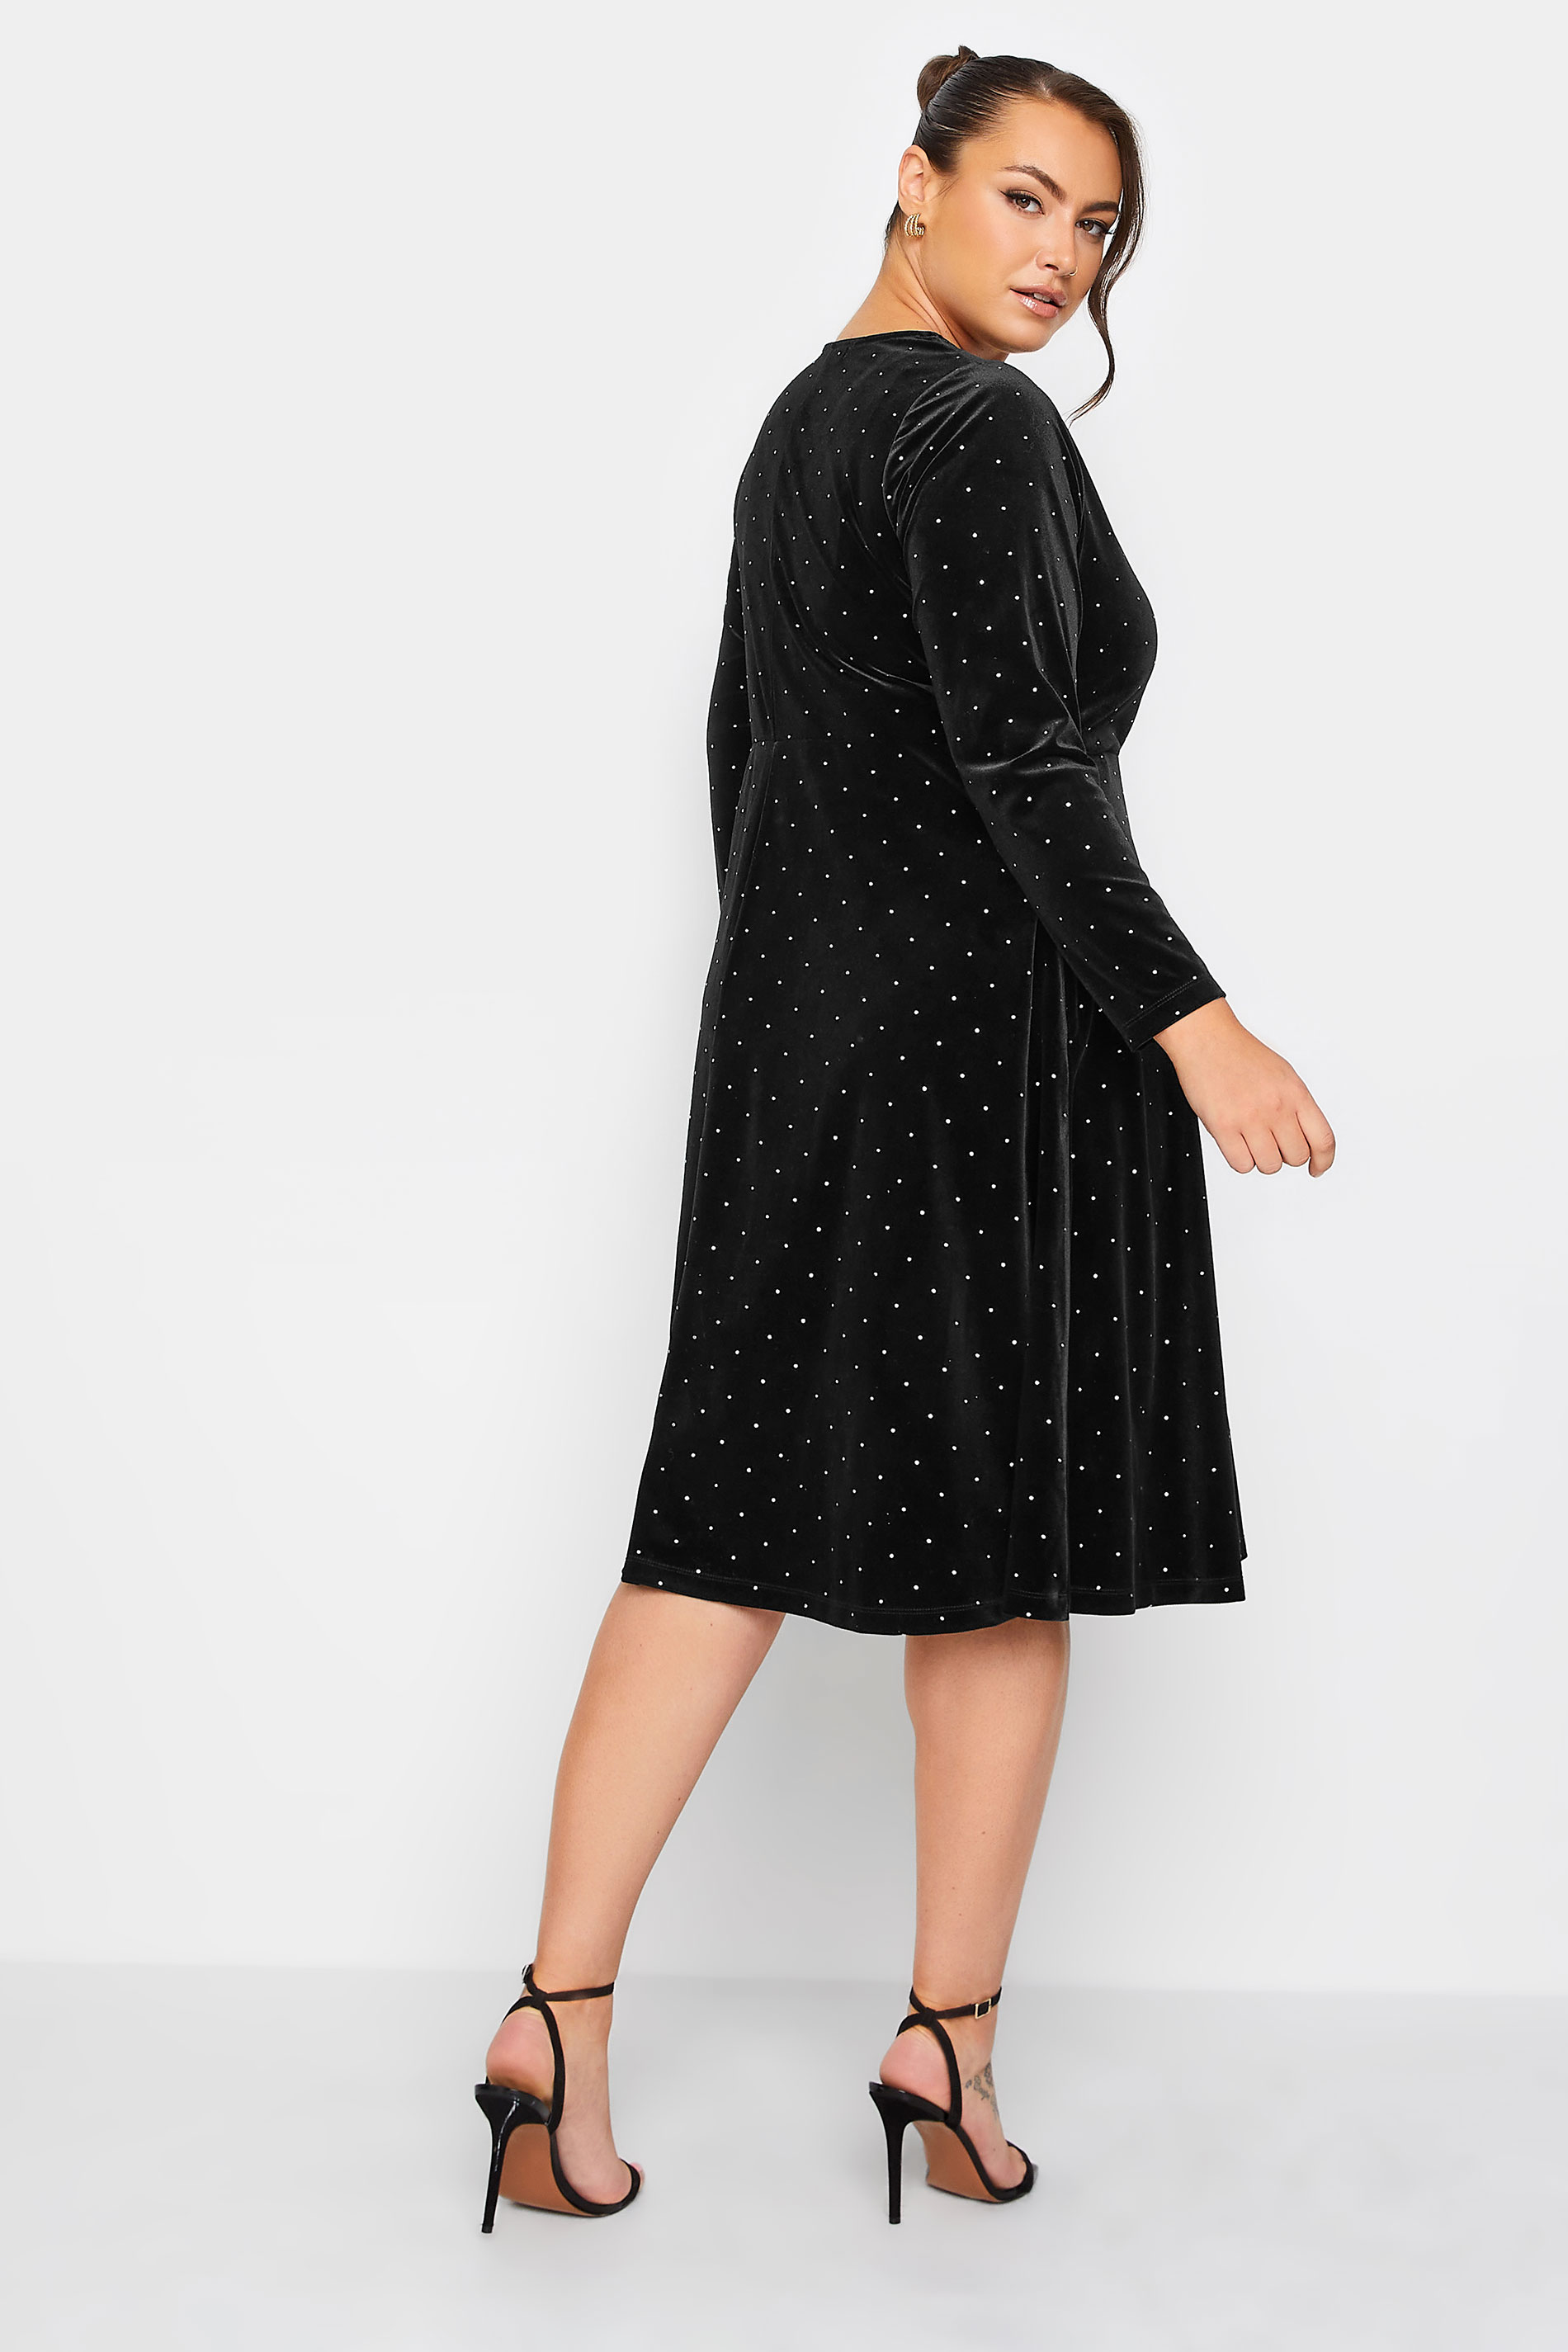 YOURS LONDON Plus Size Black Stud Velvet Wrap Dress | Yours Clothing 3